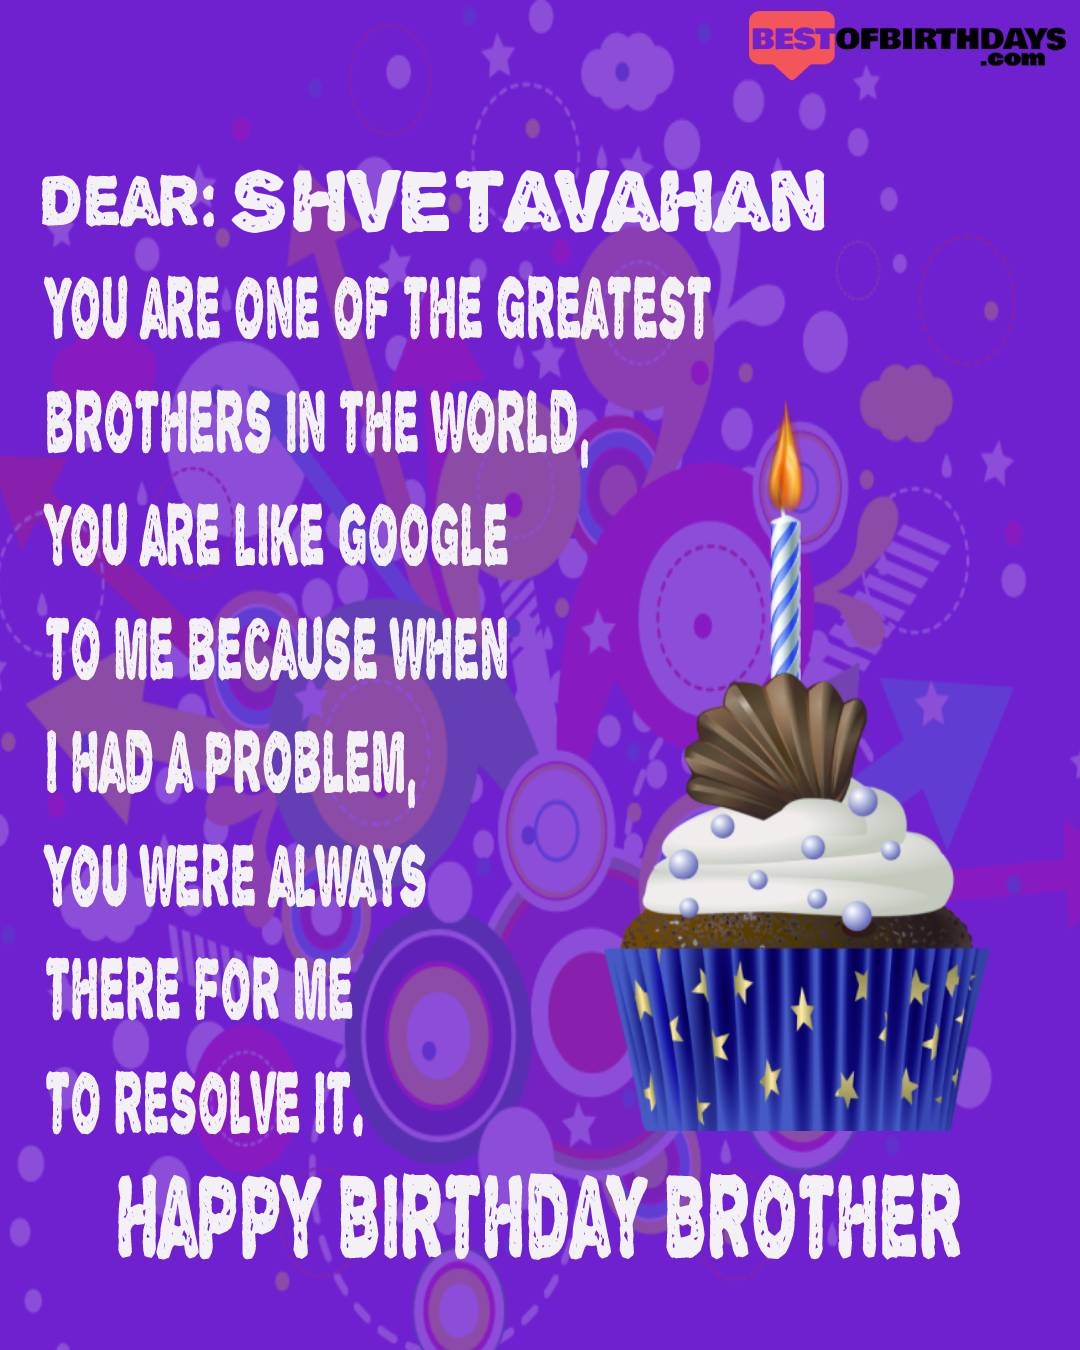 Happy birthday shvetavahan bhai brother bro